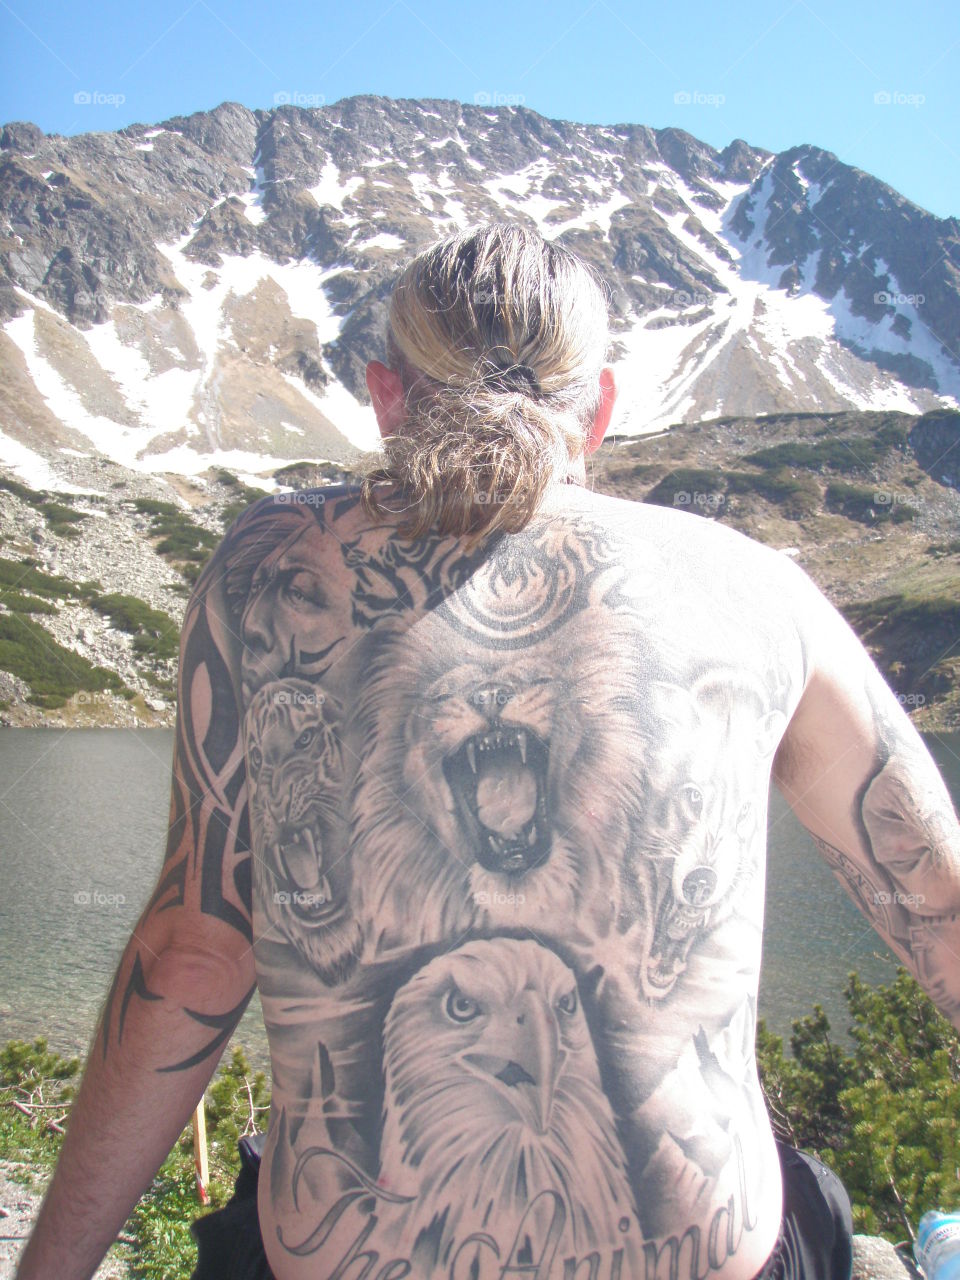 Tattoo and Nature.